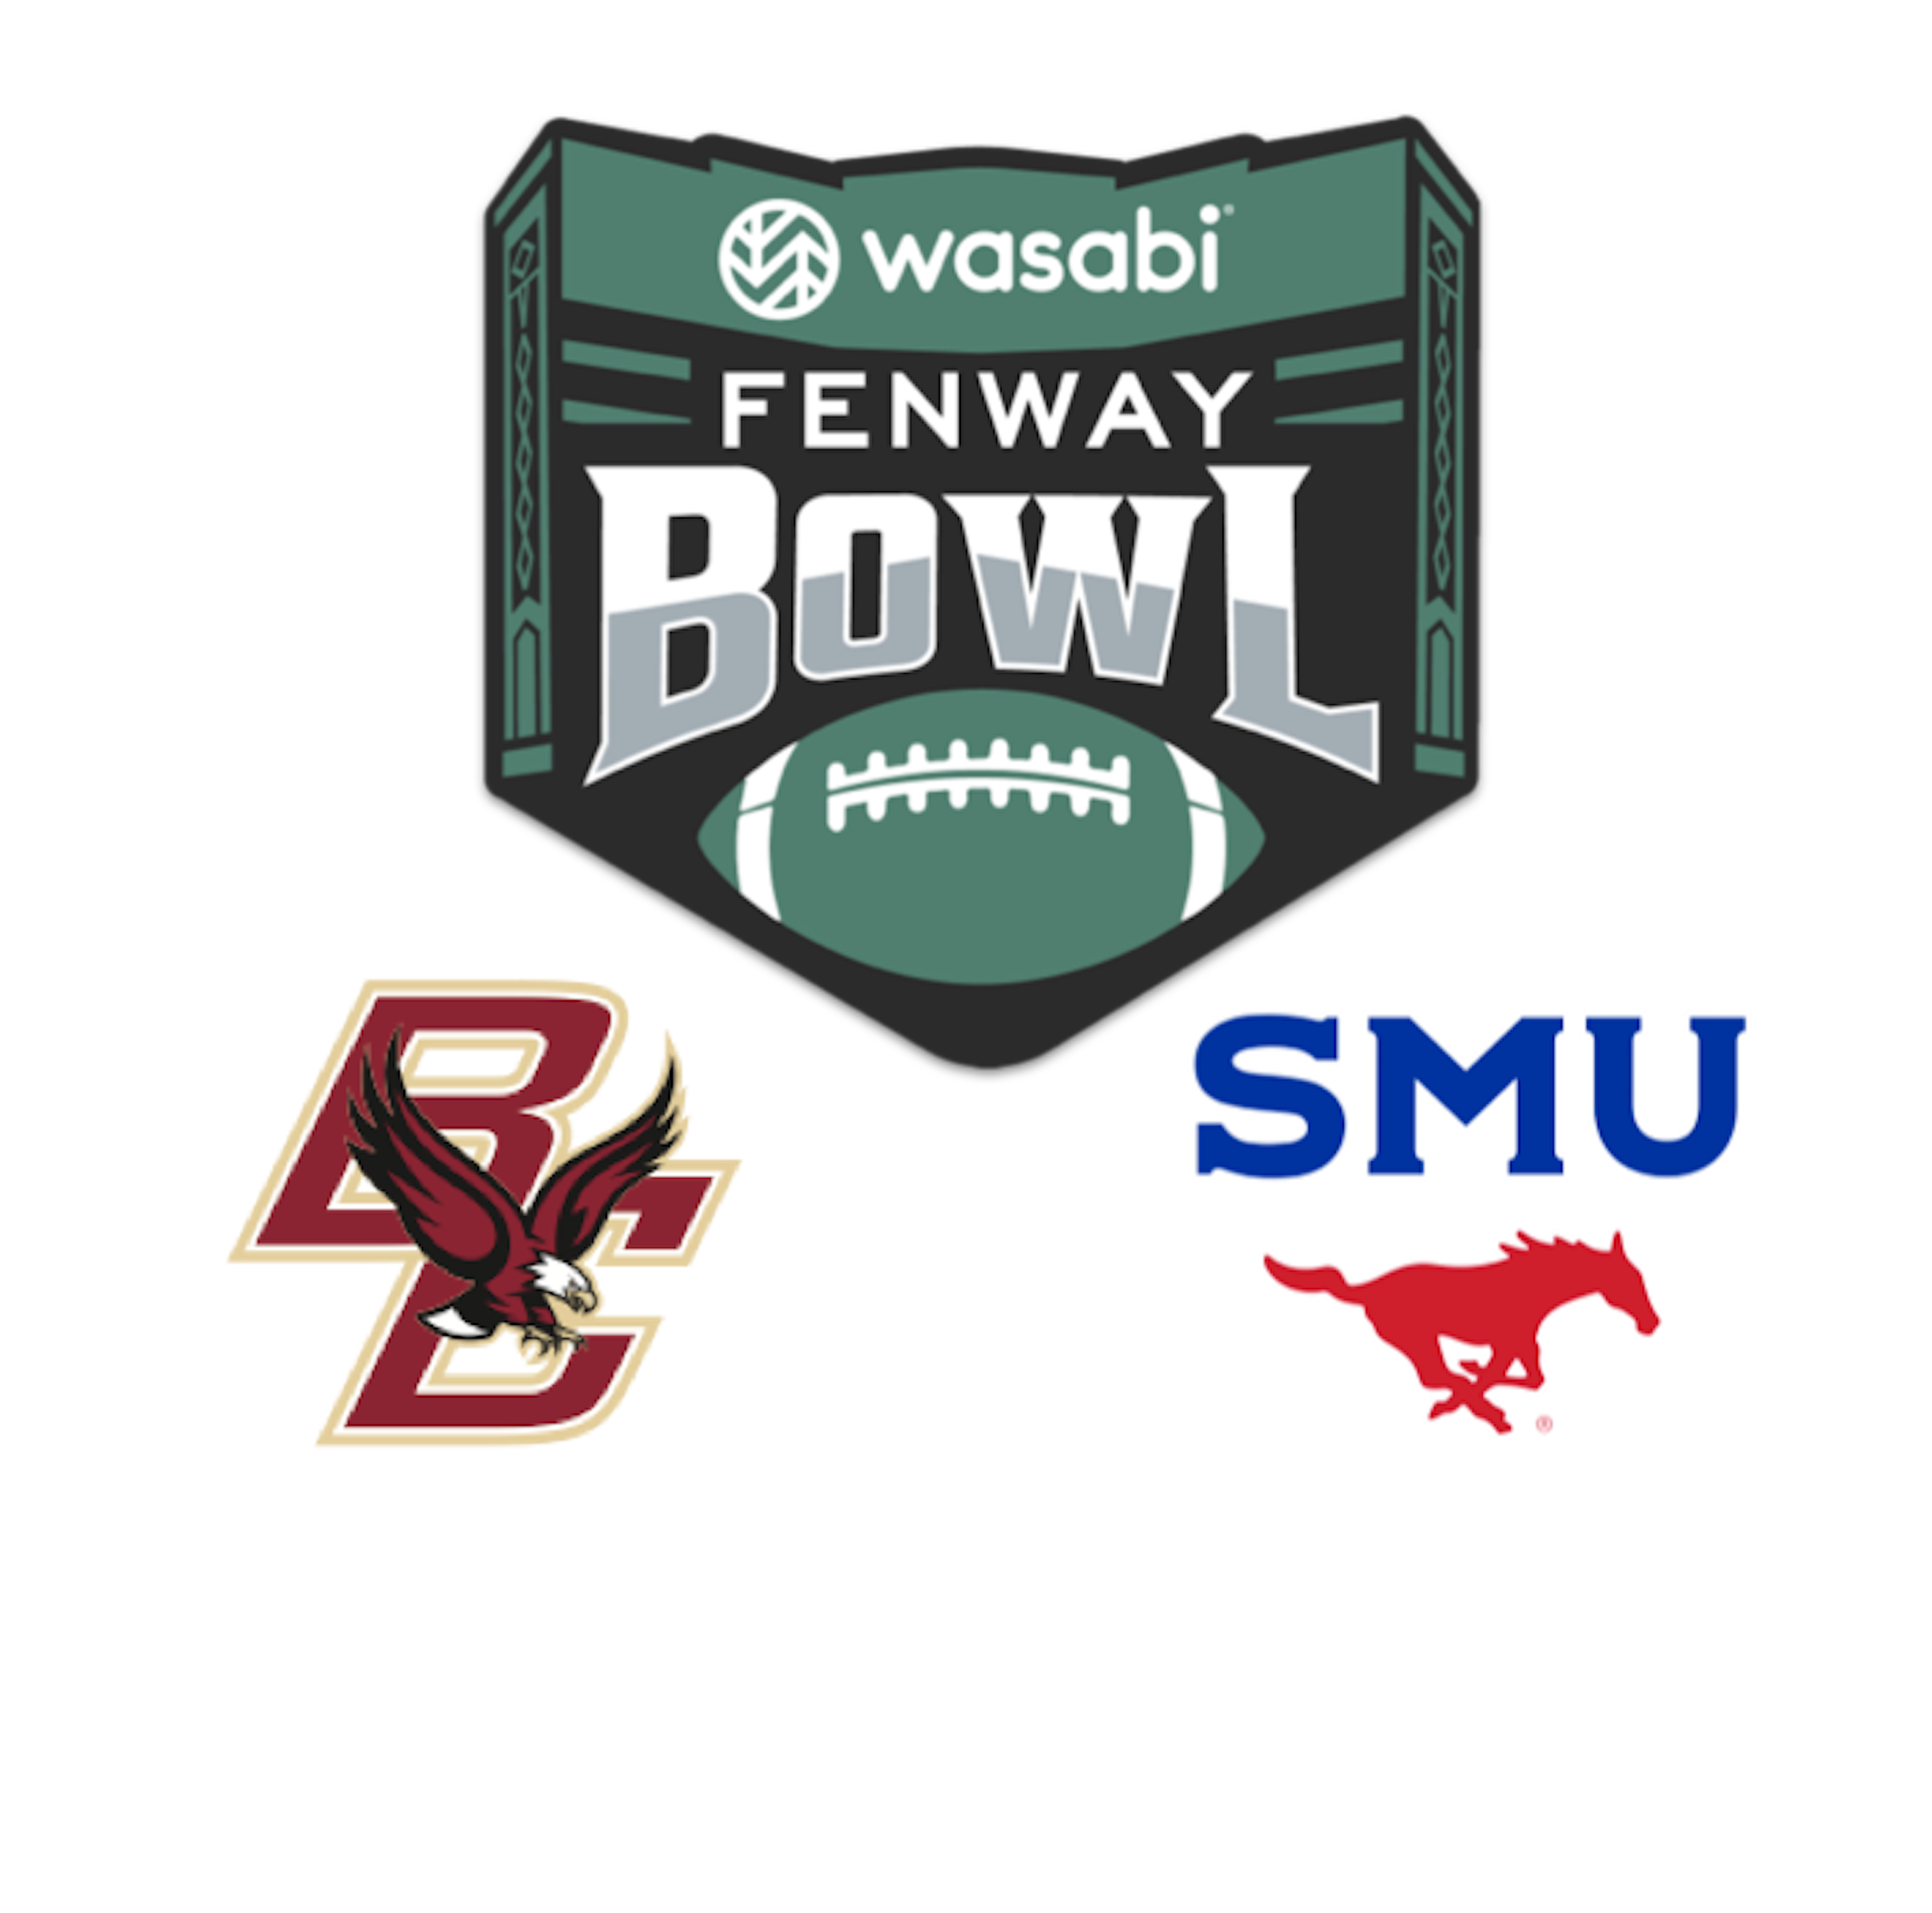 fenway bowl logo with boston college logo and smu logo